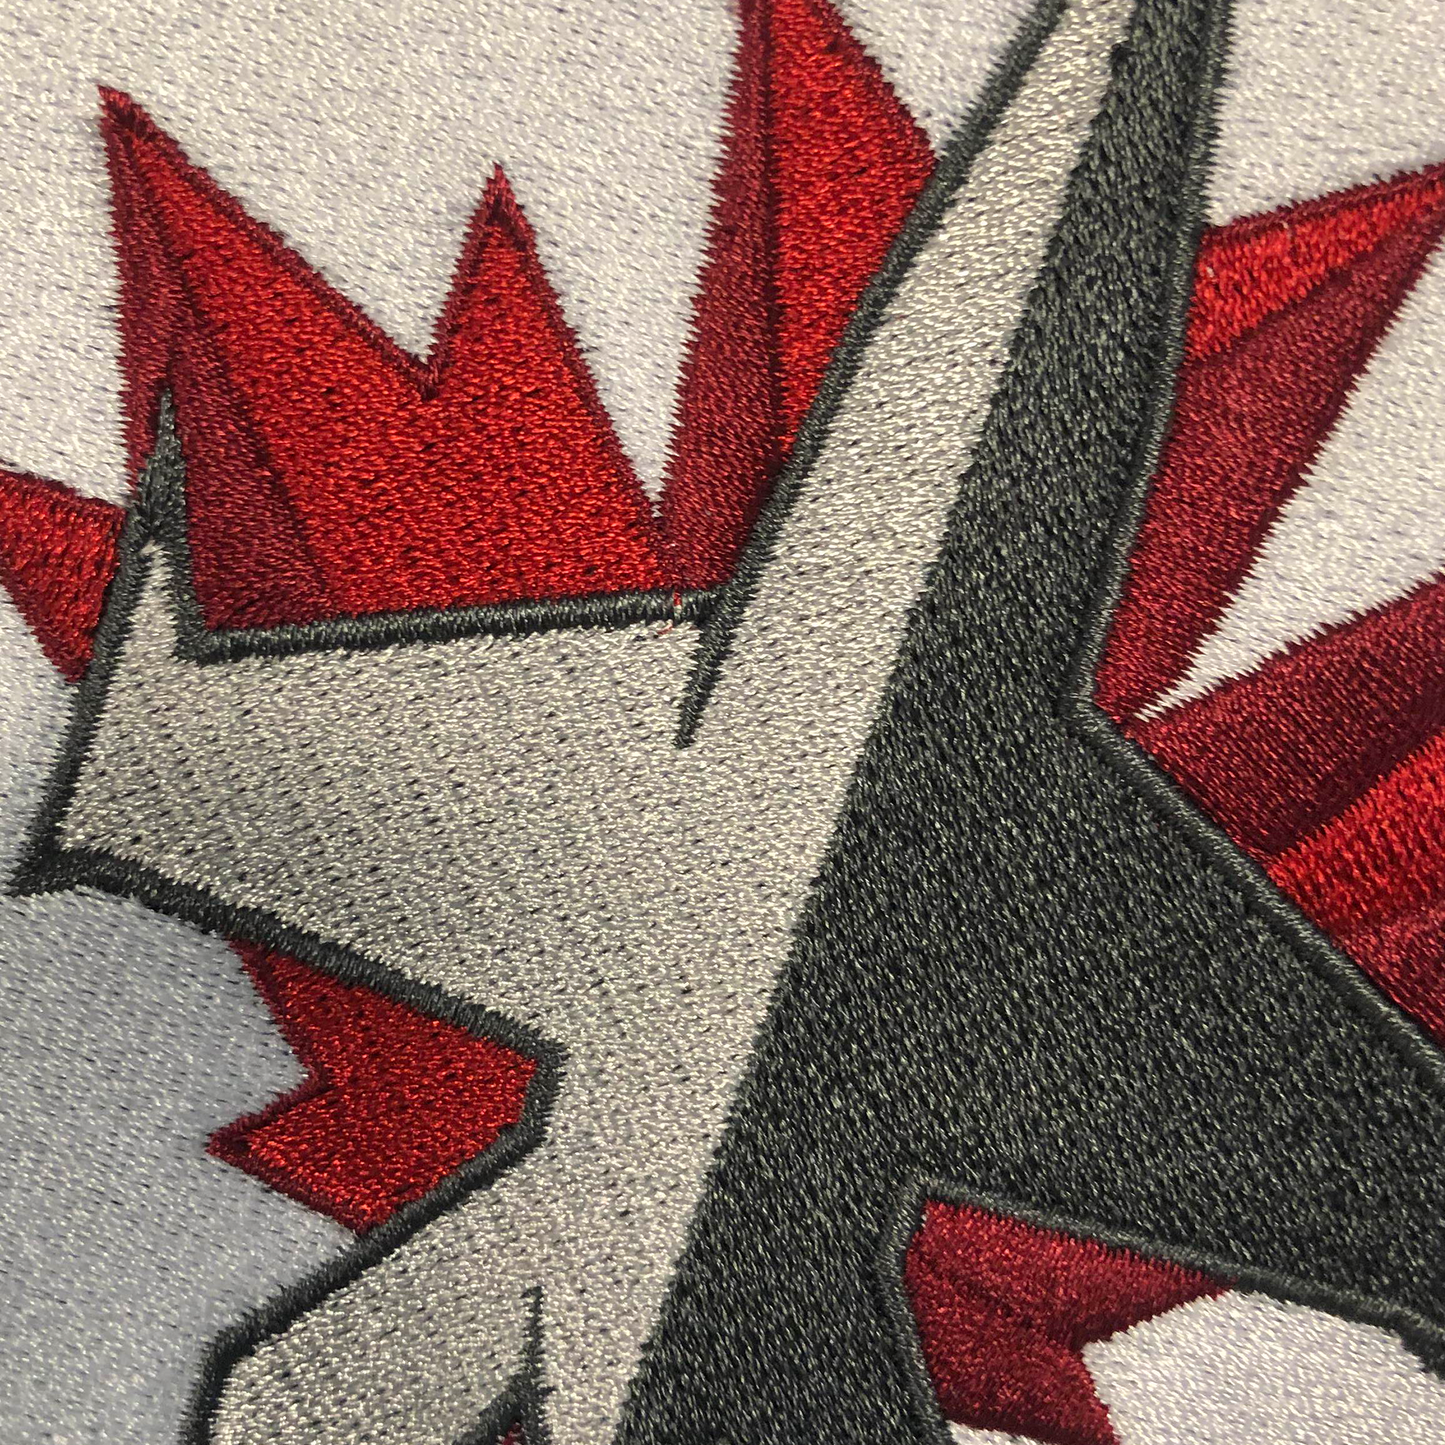 Silver Sofa with Winnipeg Jets Logo